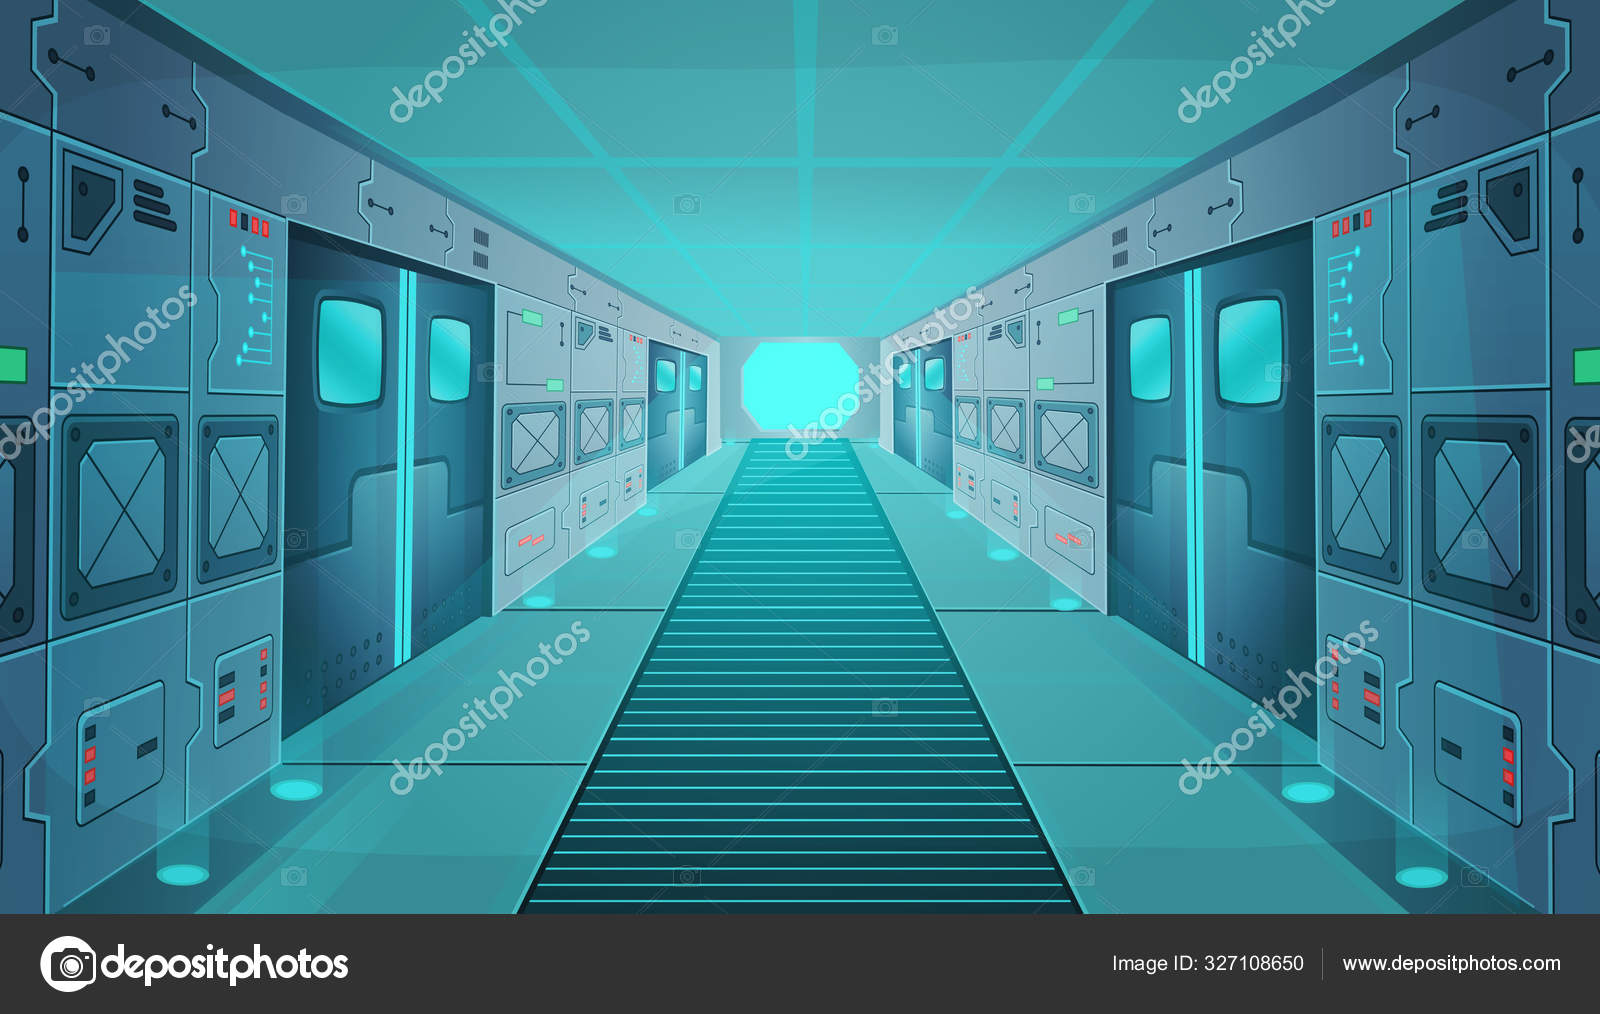 Spaceship interior Vector Art Stock Images | Depositphotos